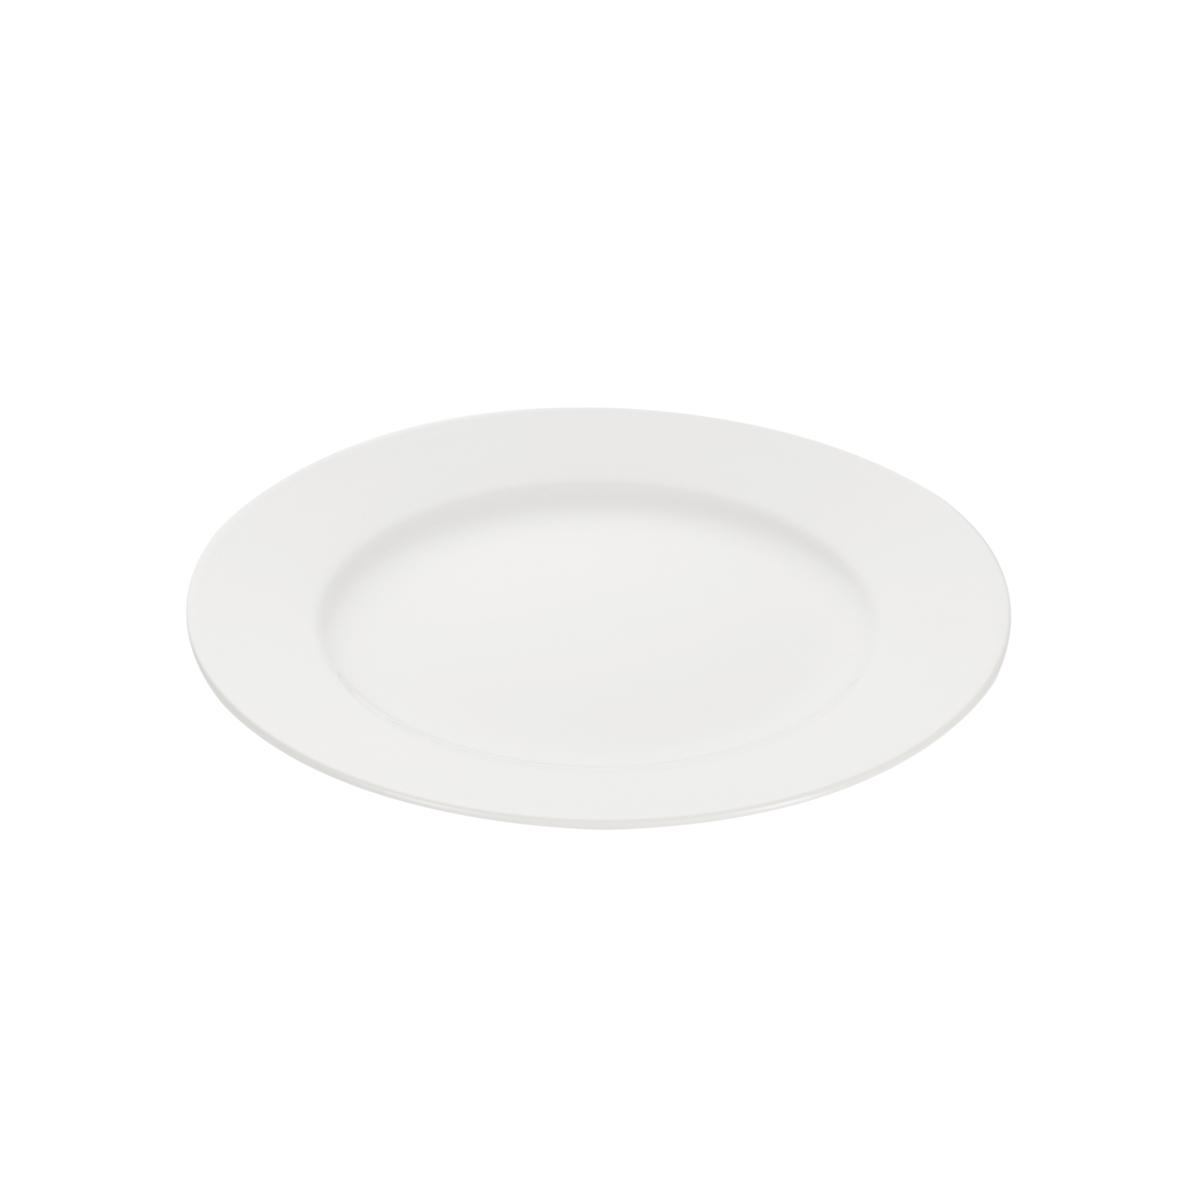 Плоская тарелка Gipfel Classique 50906 27 см плоская тарелка gipfel classique 50907 30 см